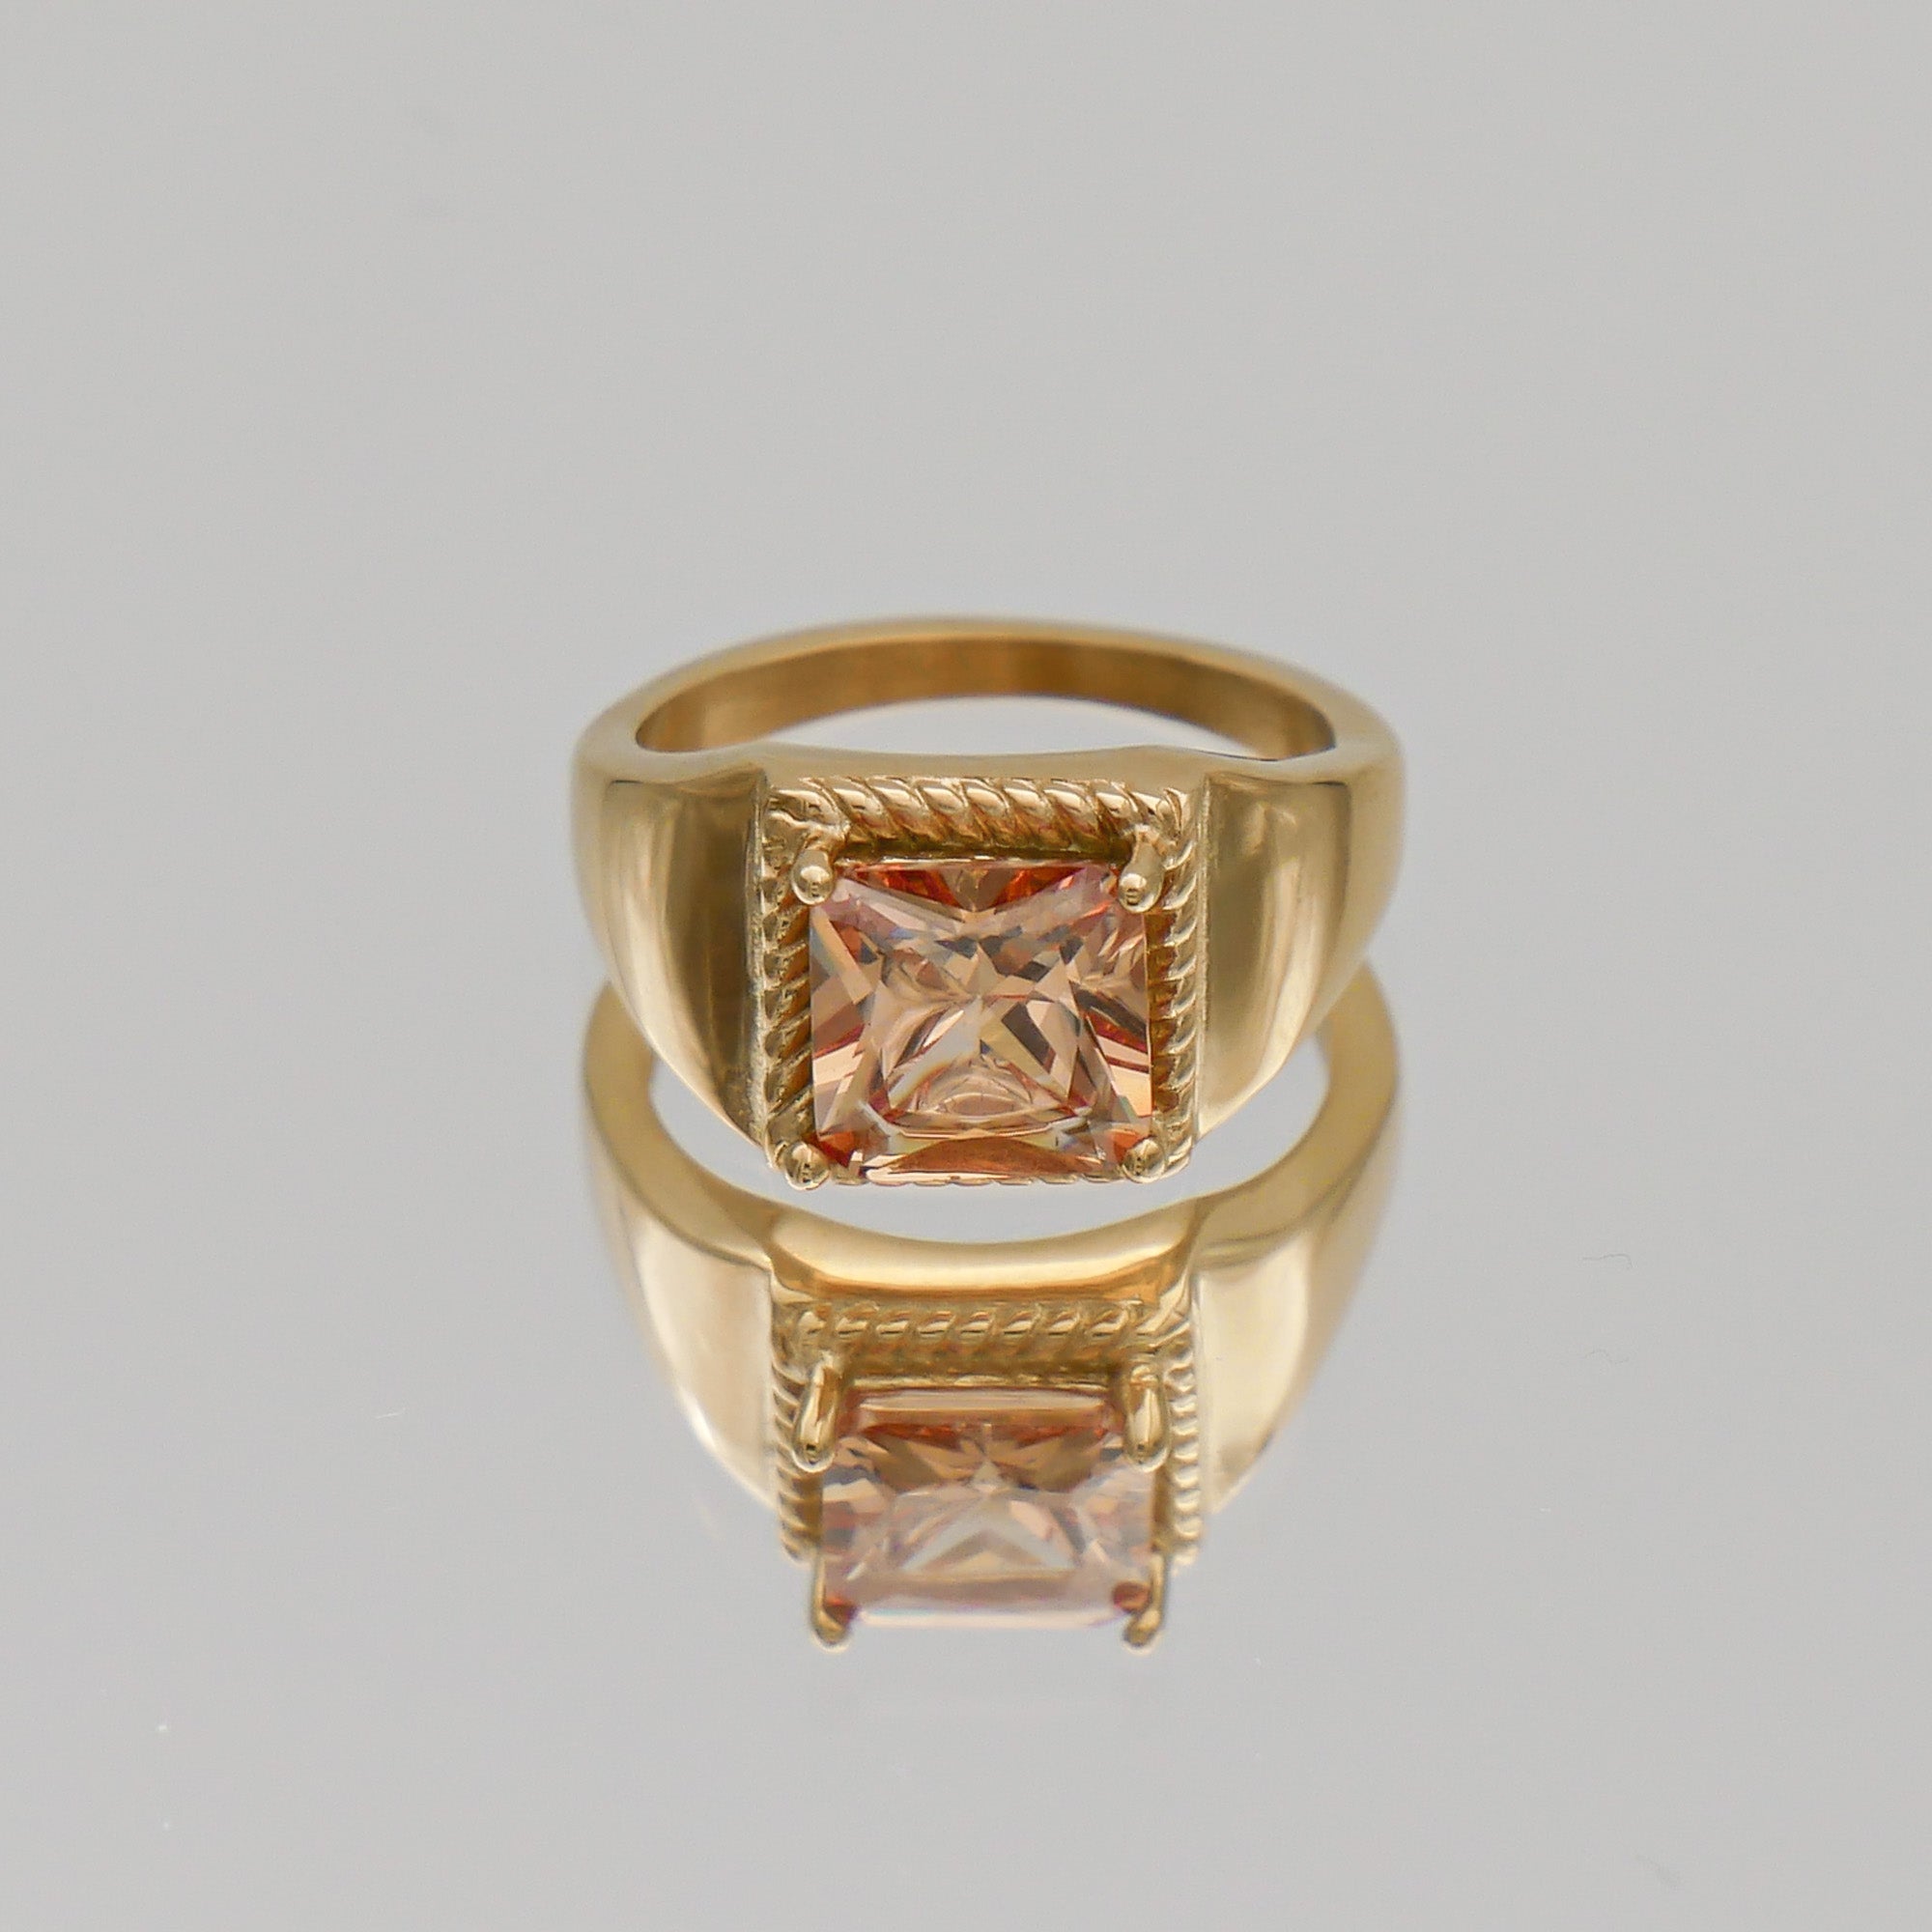 Hana Gemstone Signet Ring with yellow cubic zirconia